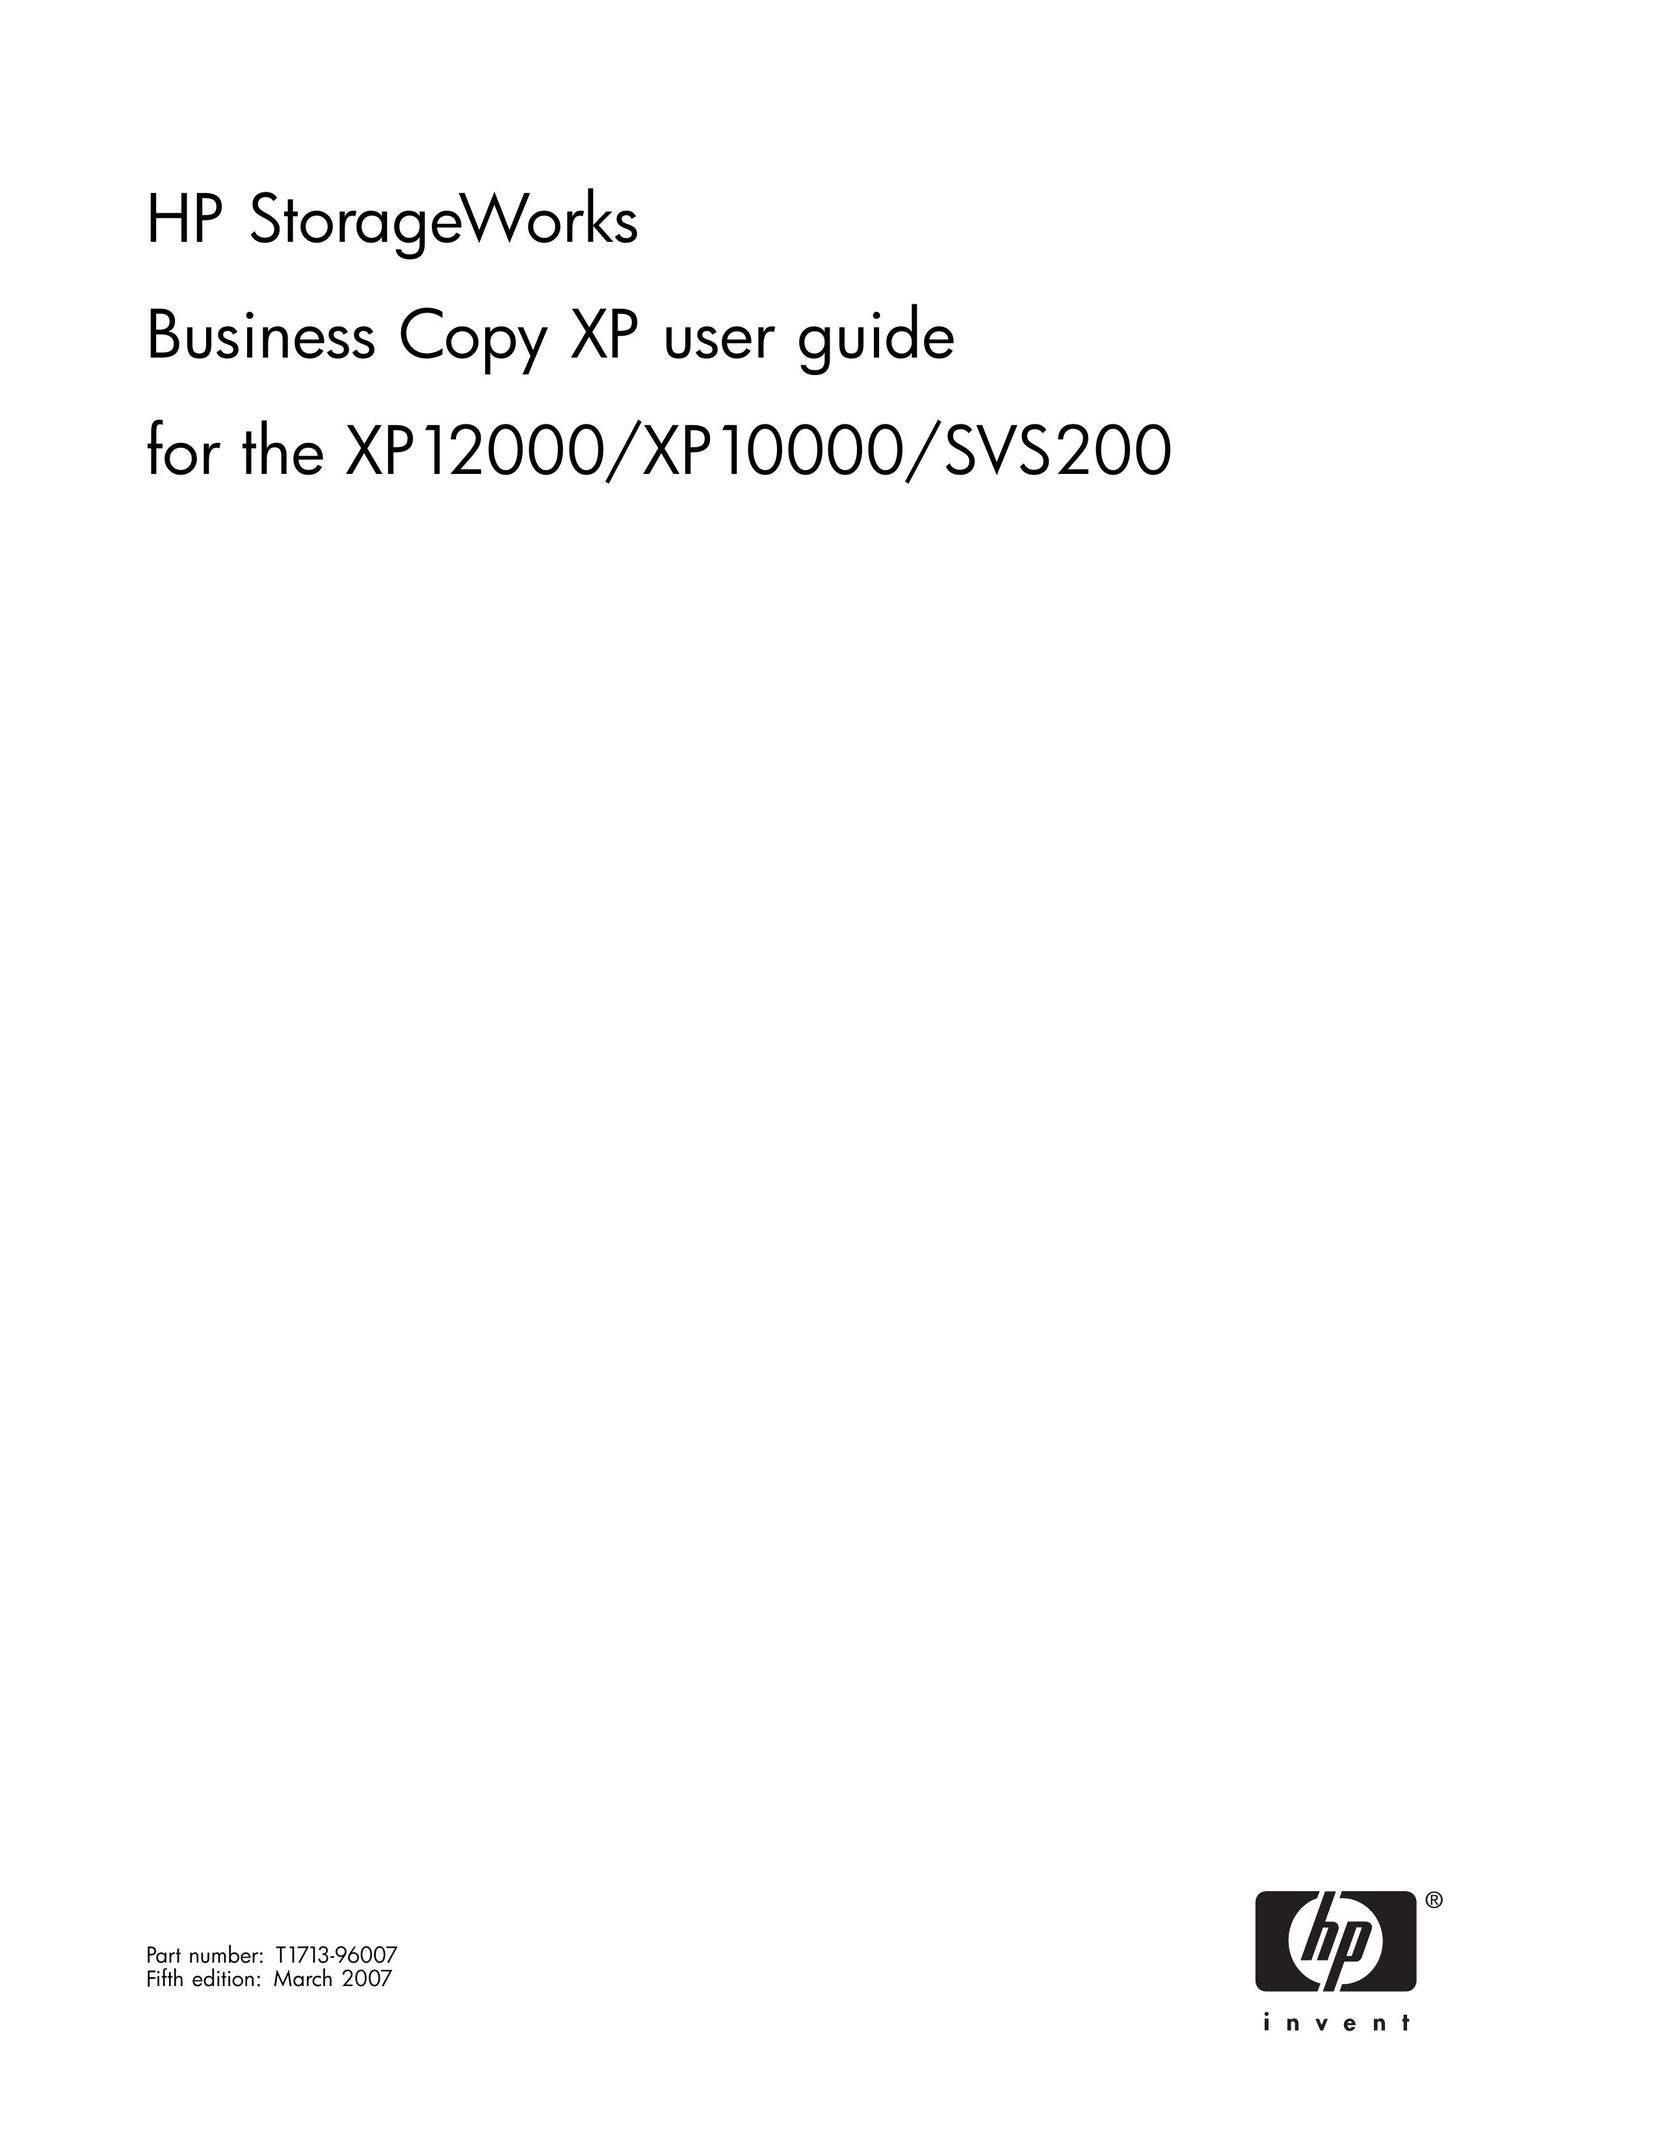 HP (Hewlett-Packard) XP12000 Tool Storage User Manual